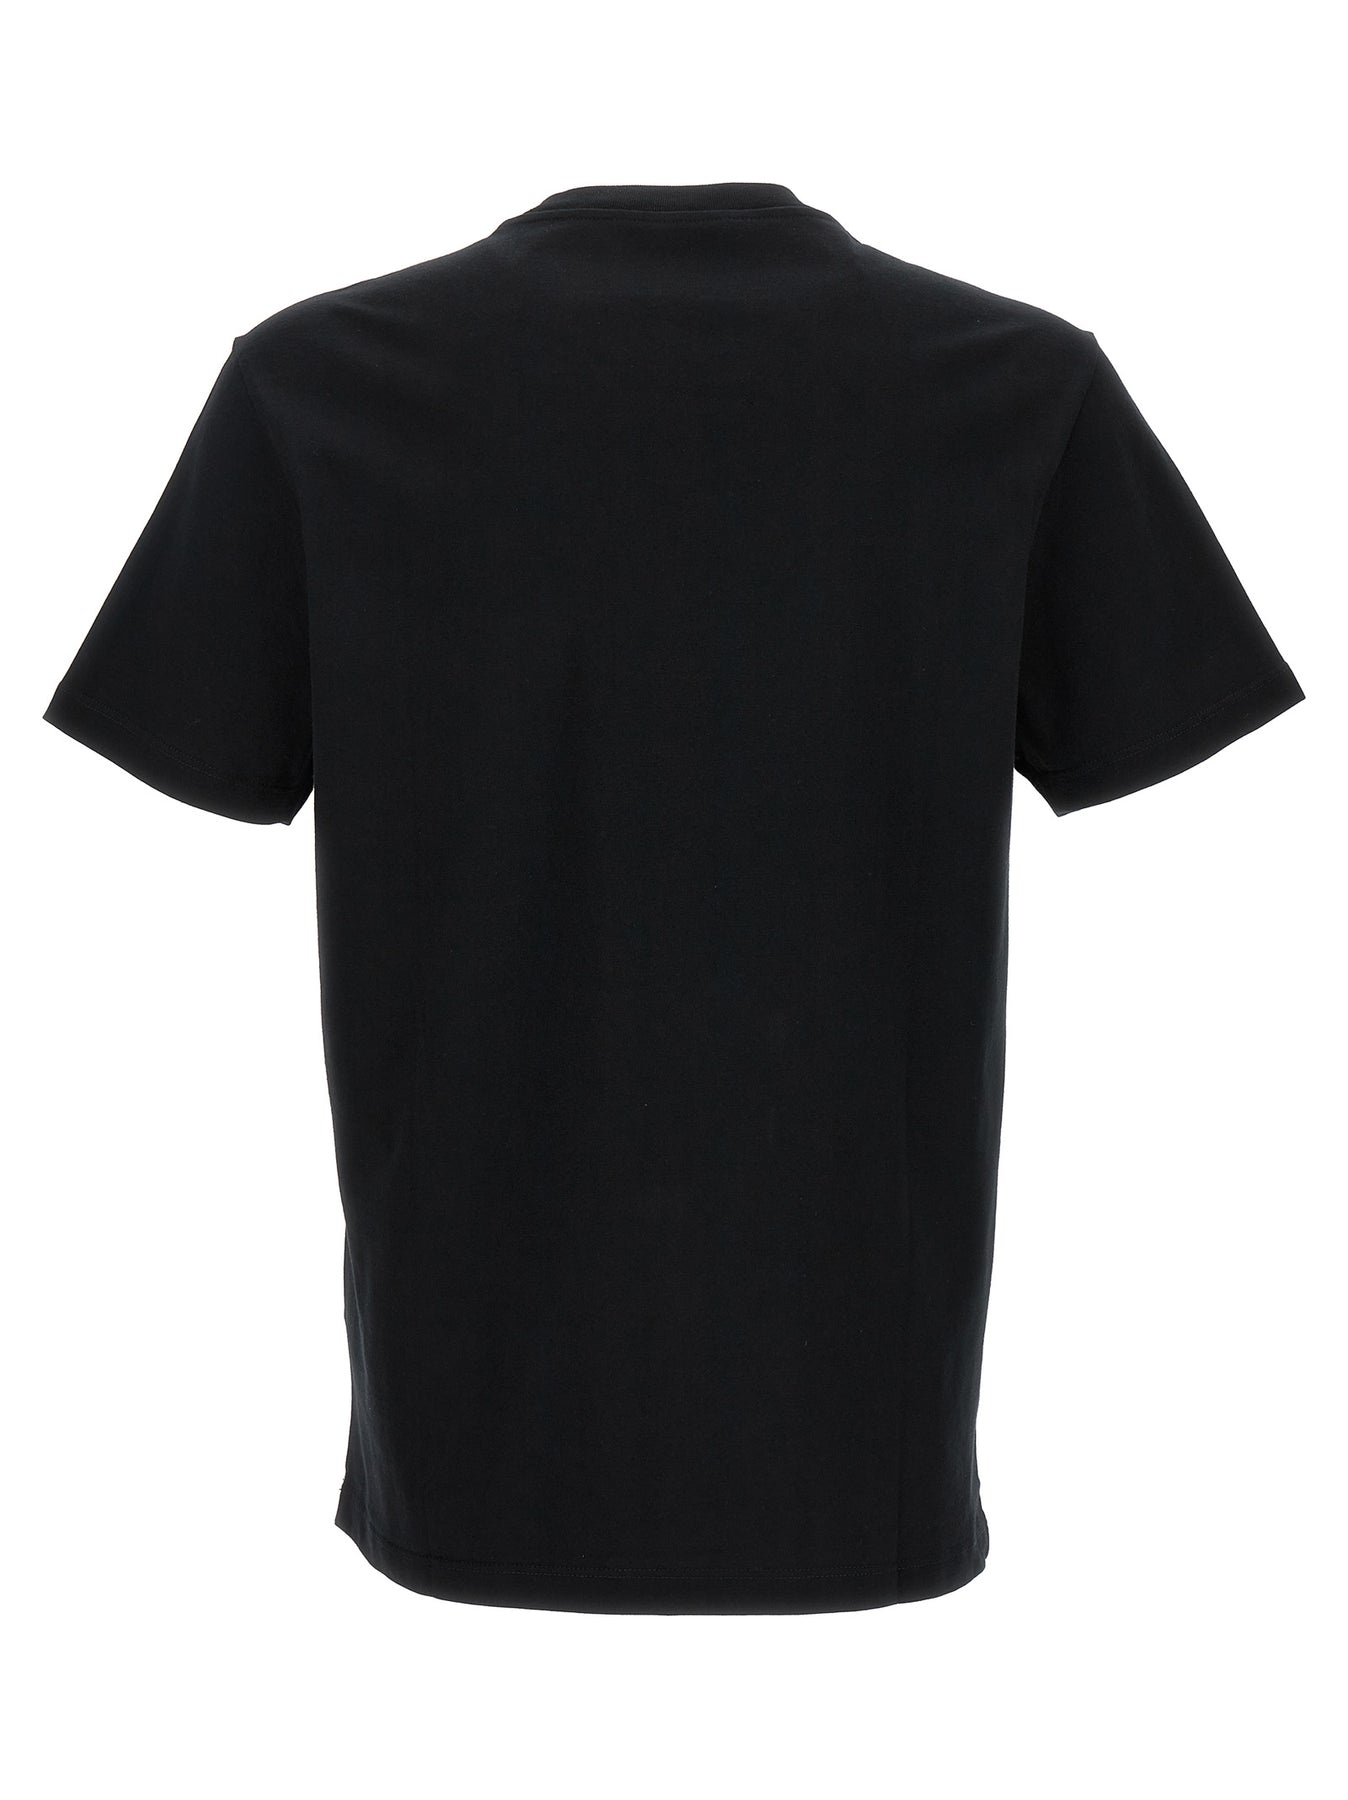 Medusa T-Shirt Black - 2